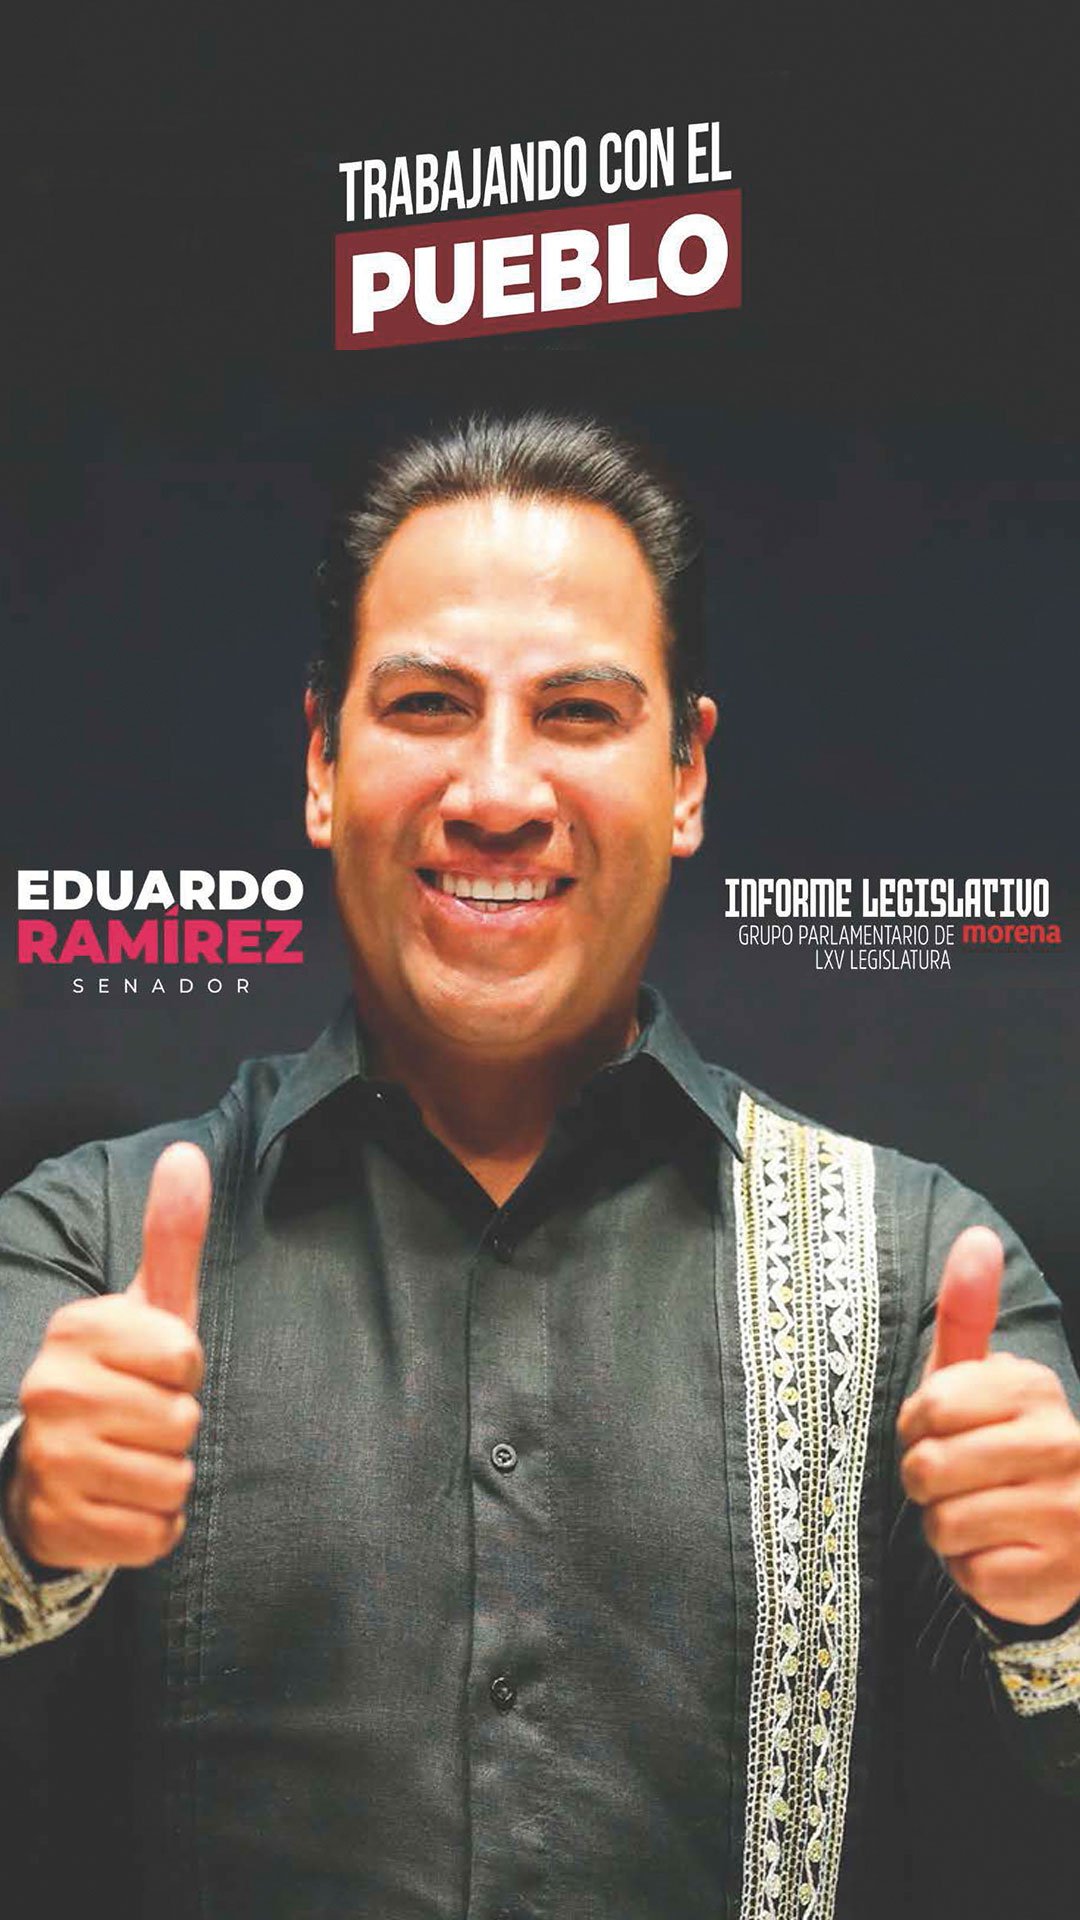 Cartel promocional de informe legislativo de Eduardo Ramírez como senador